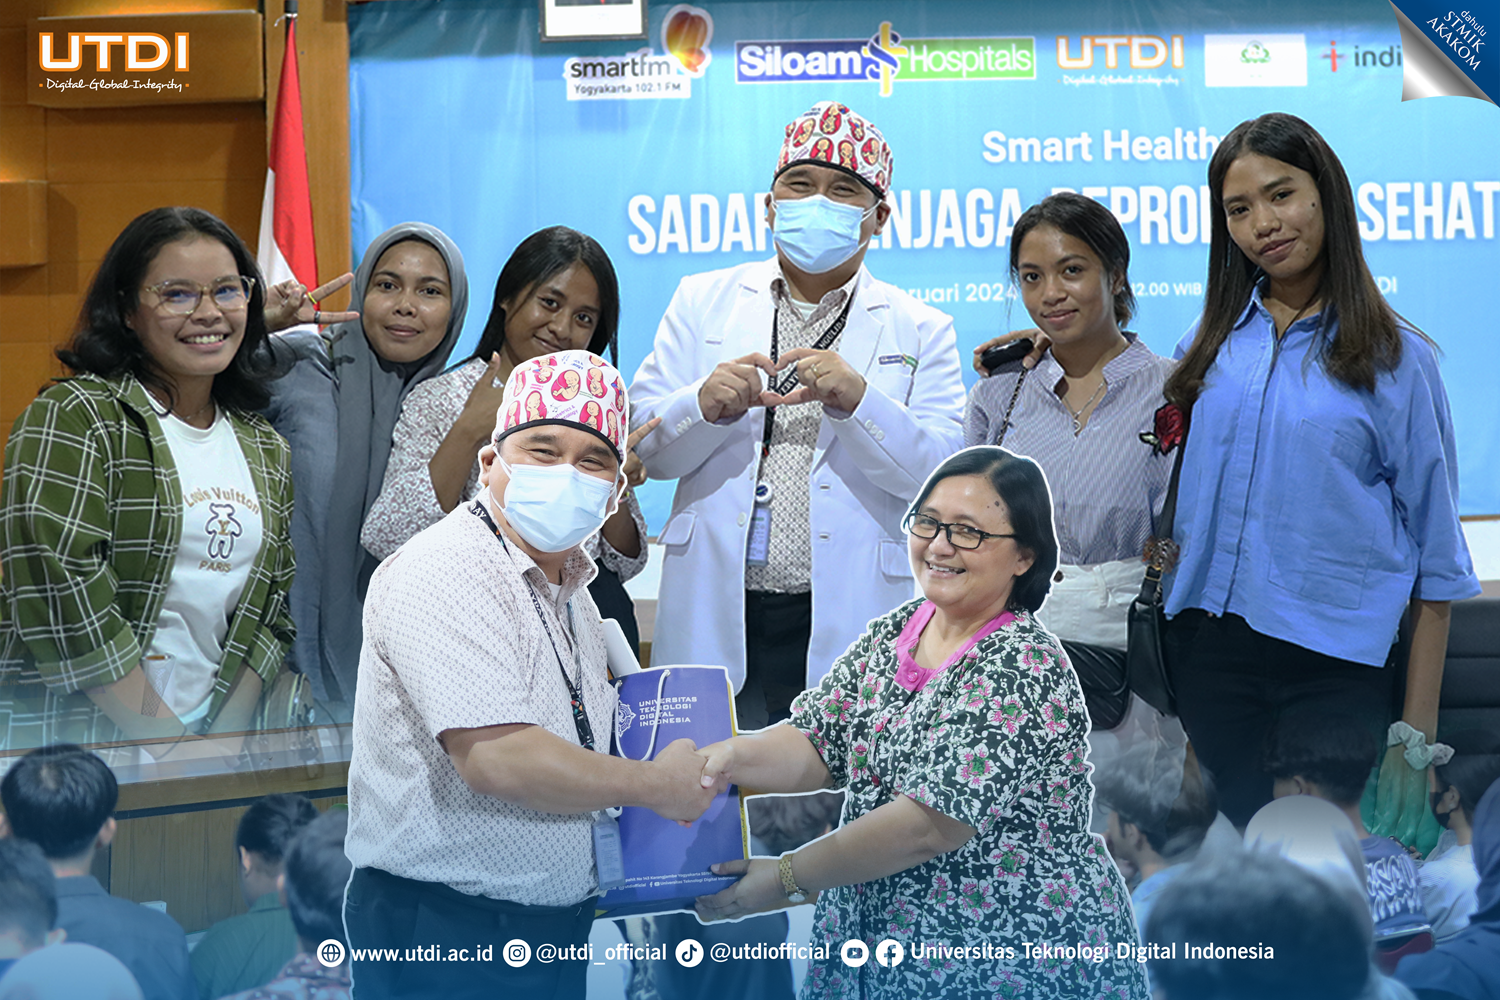 Sukses Besar, Radio Smart 102.1 FM Yogyakarta Gelar 'Smart Healthy' di UTDI